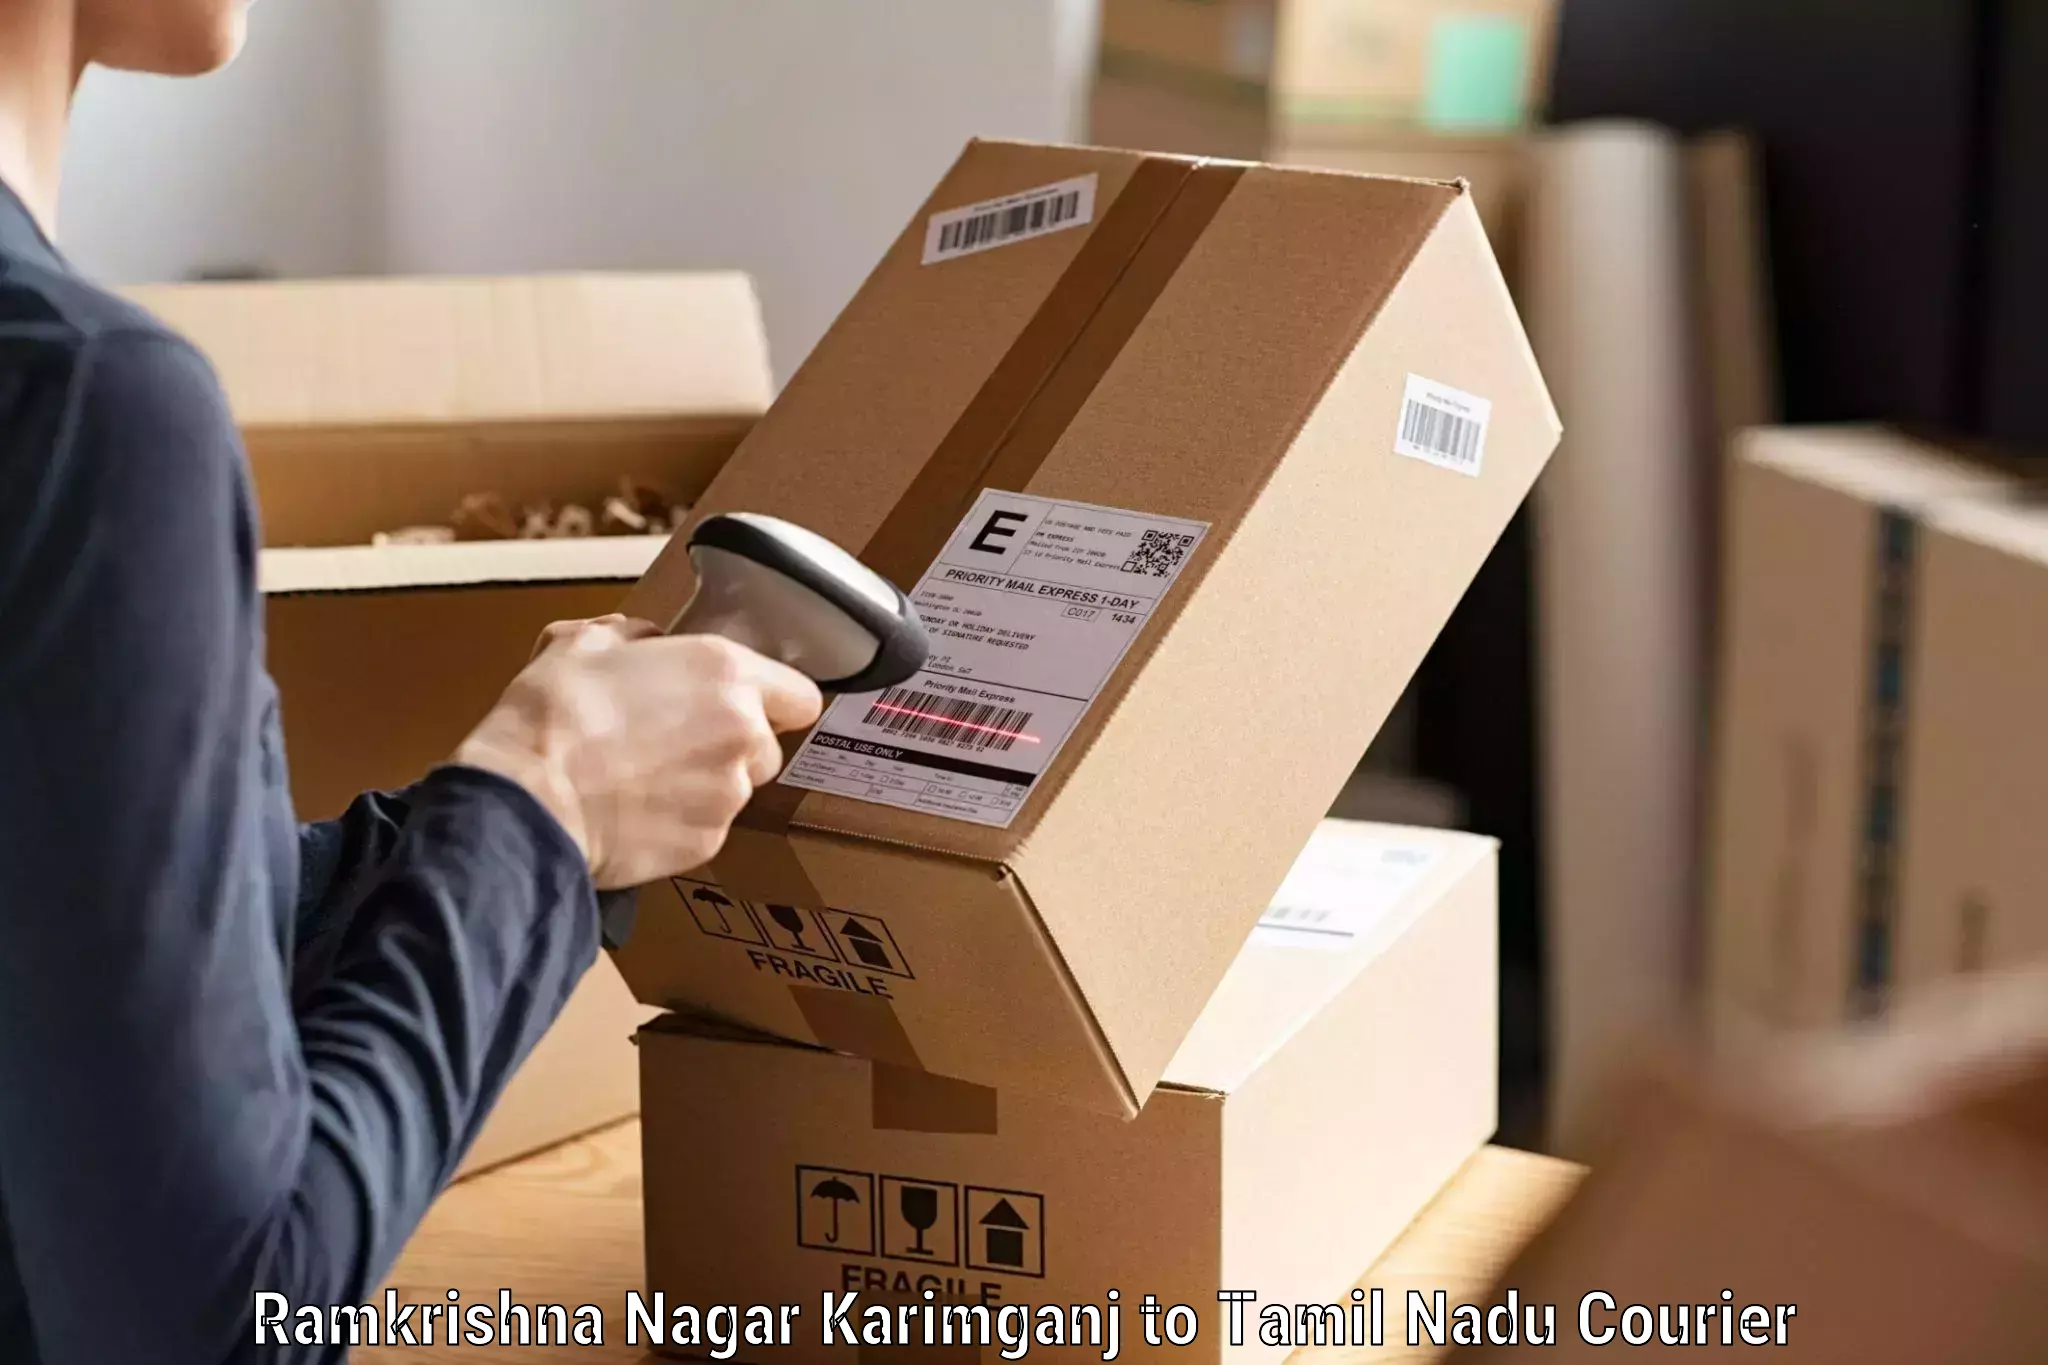 Affordable parcel rates Ramkrishna Nagar Karimganj to Meenakshi Academy of Higher Education and Research Chennai